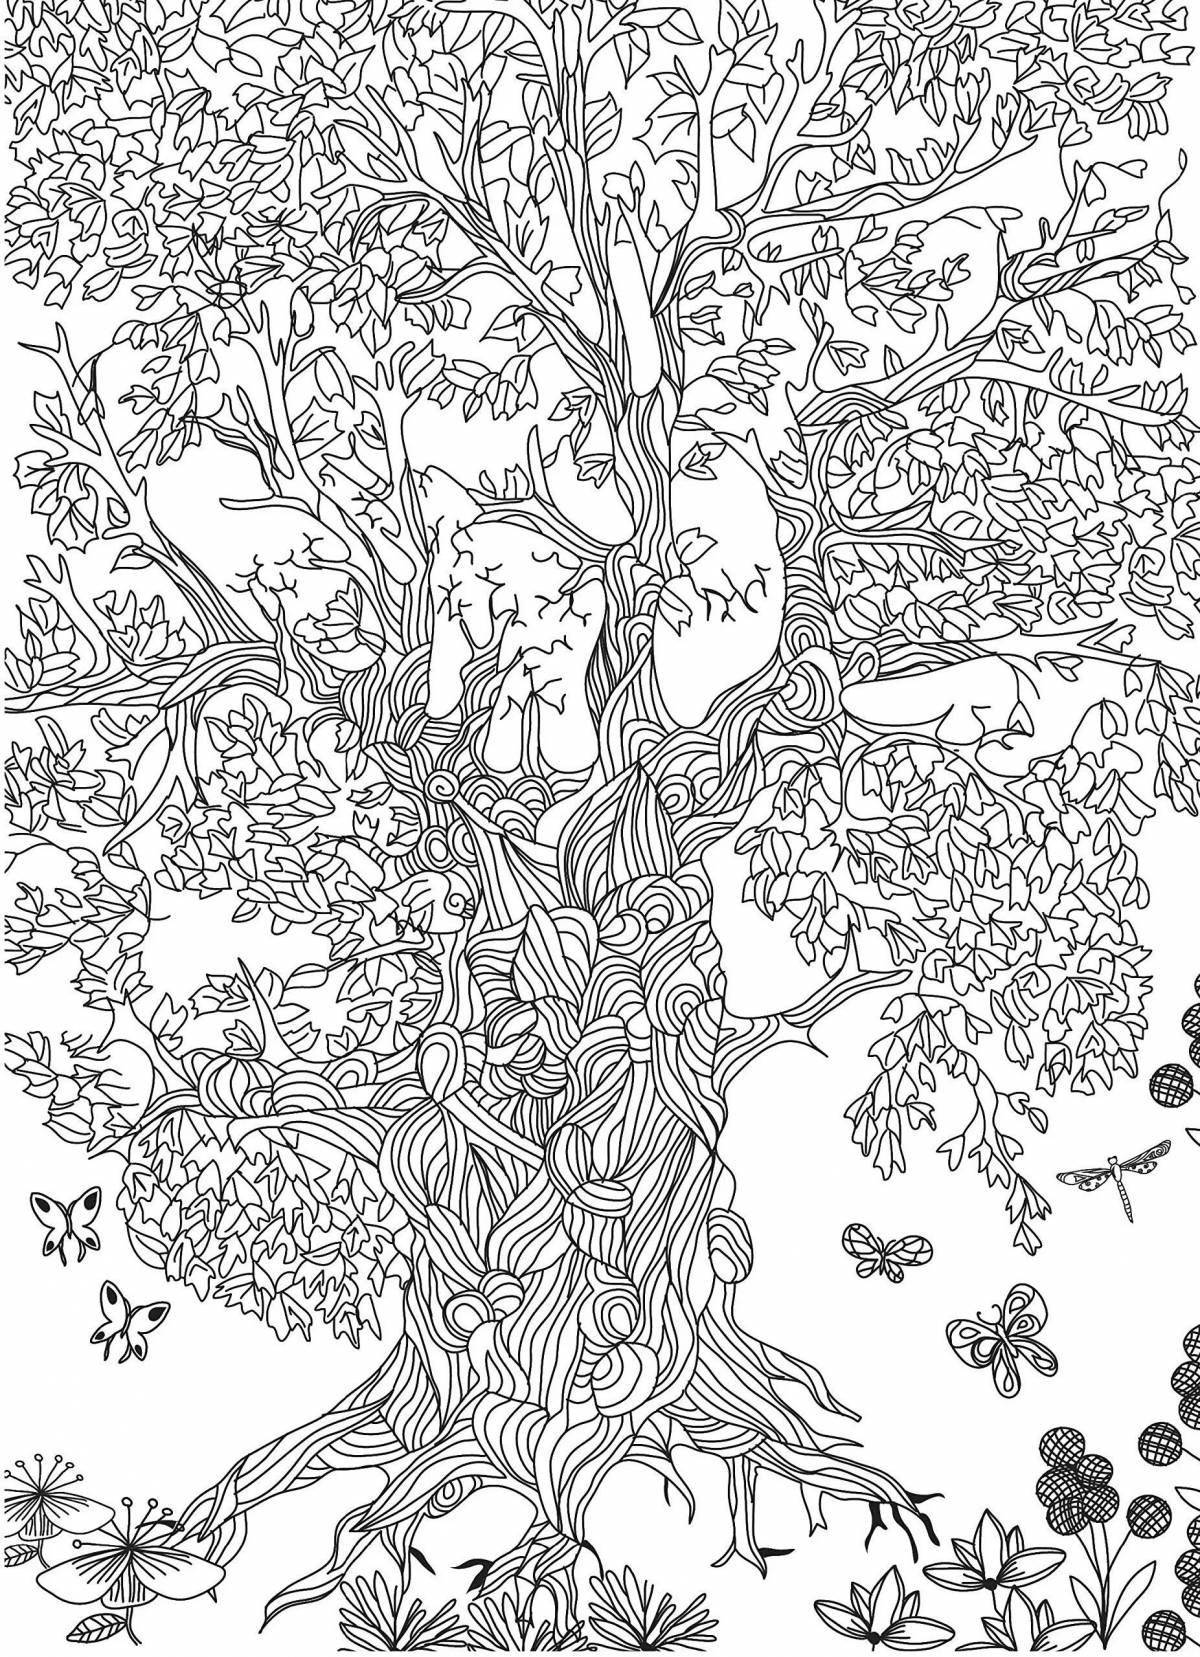 Coloring the grandiose tree of life